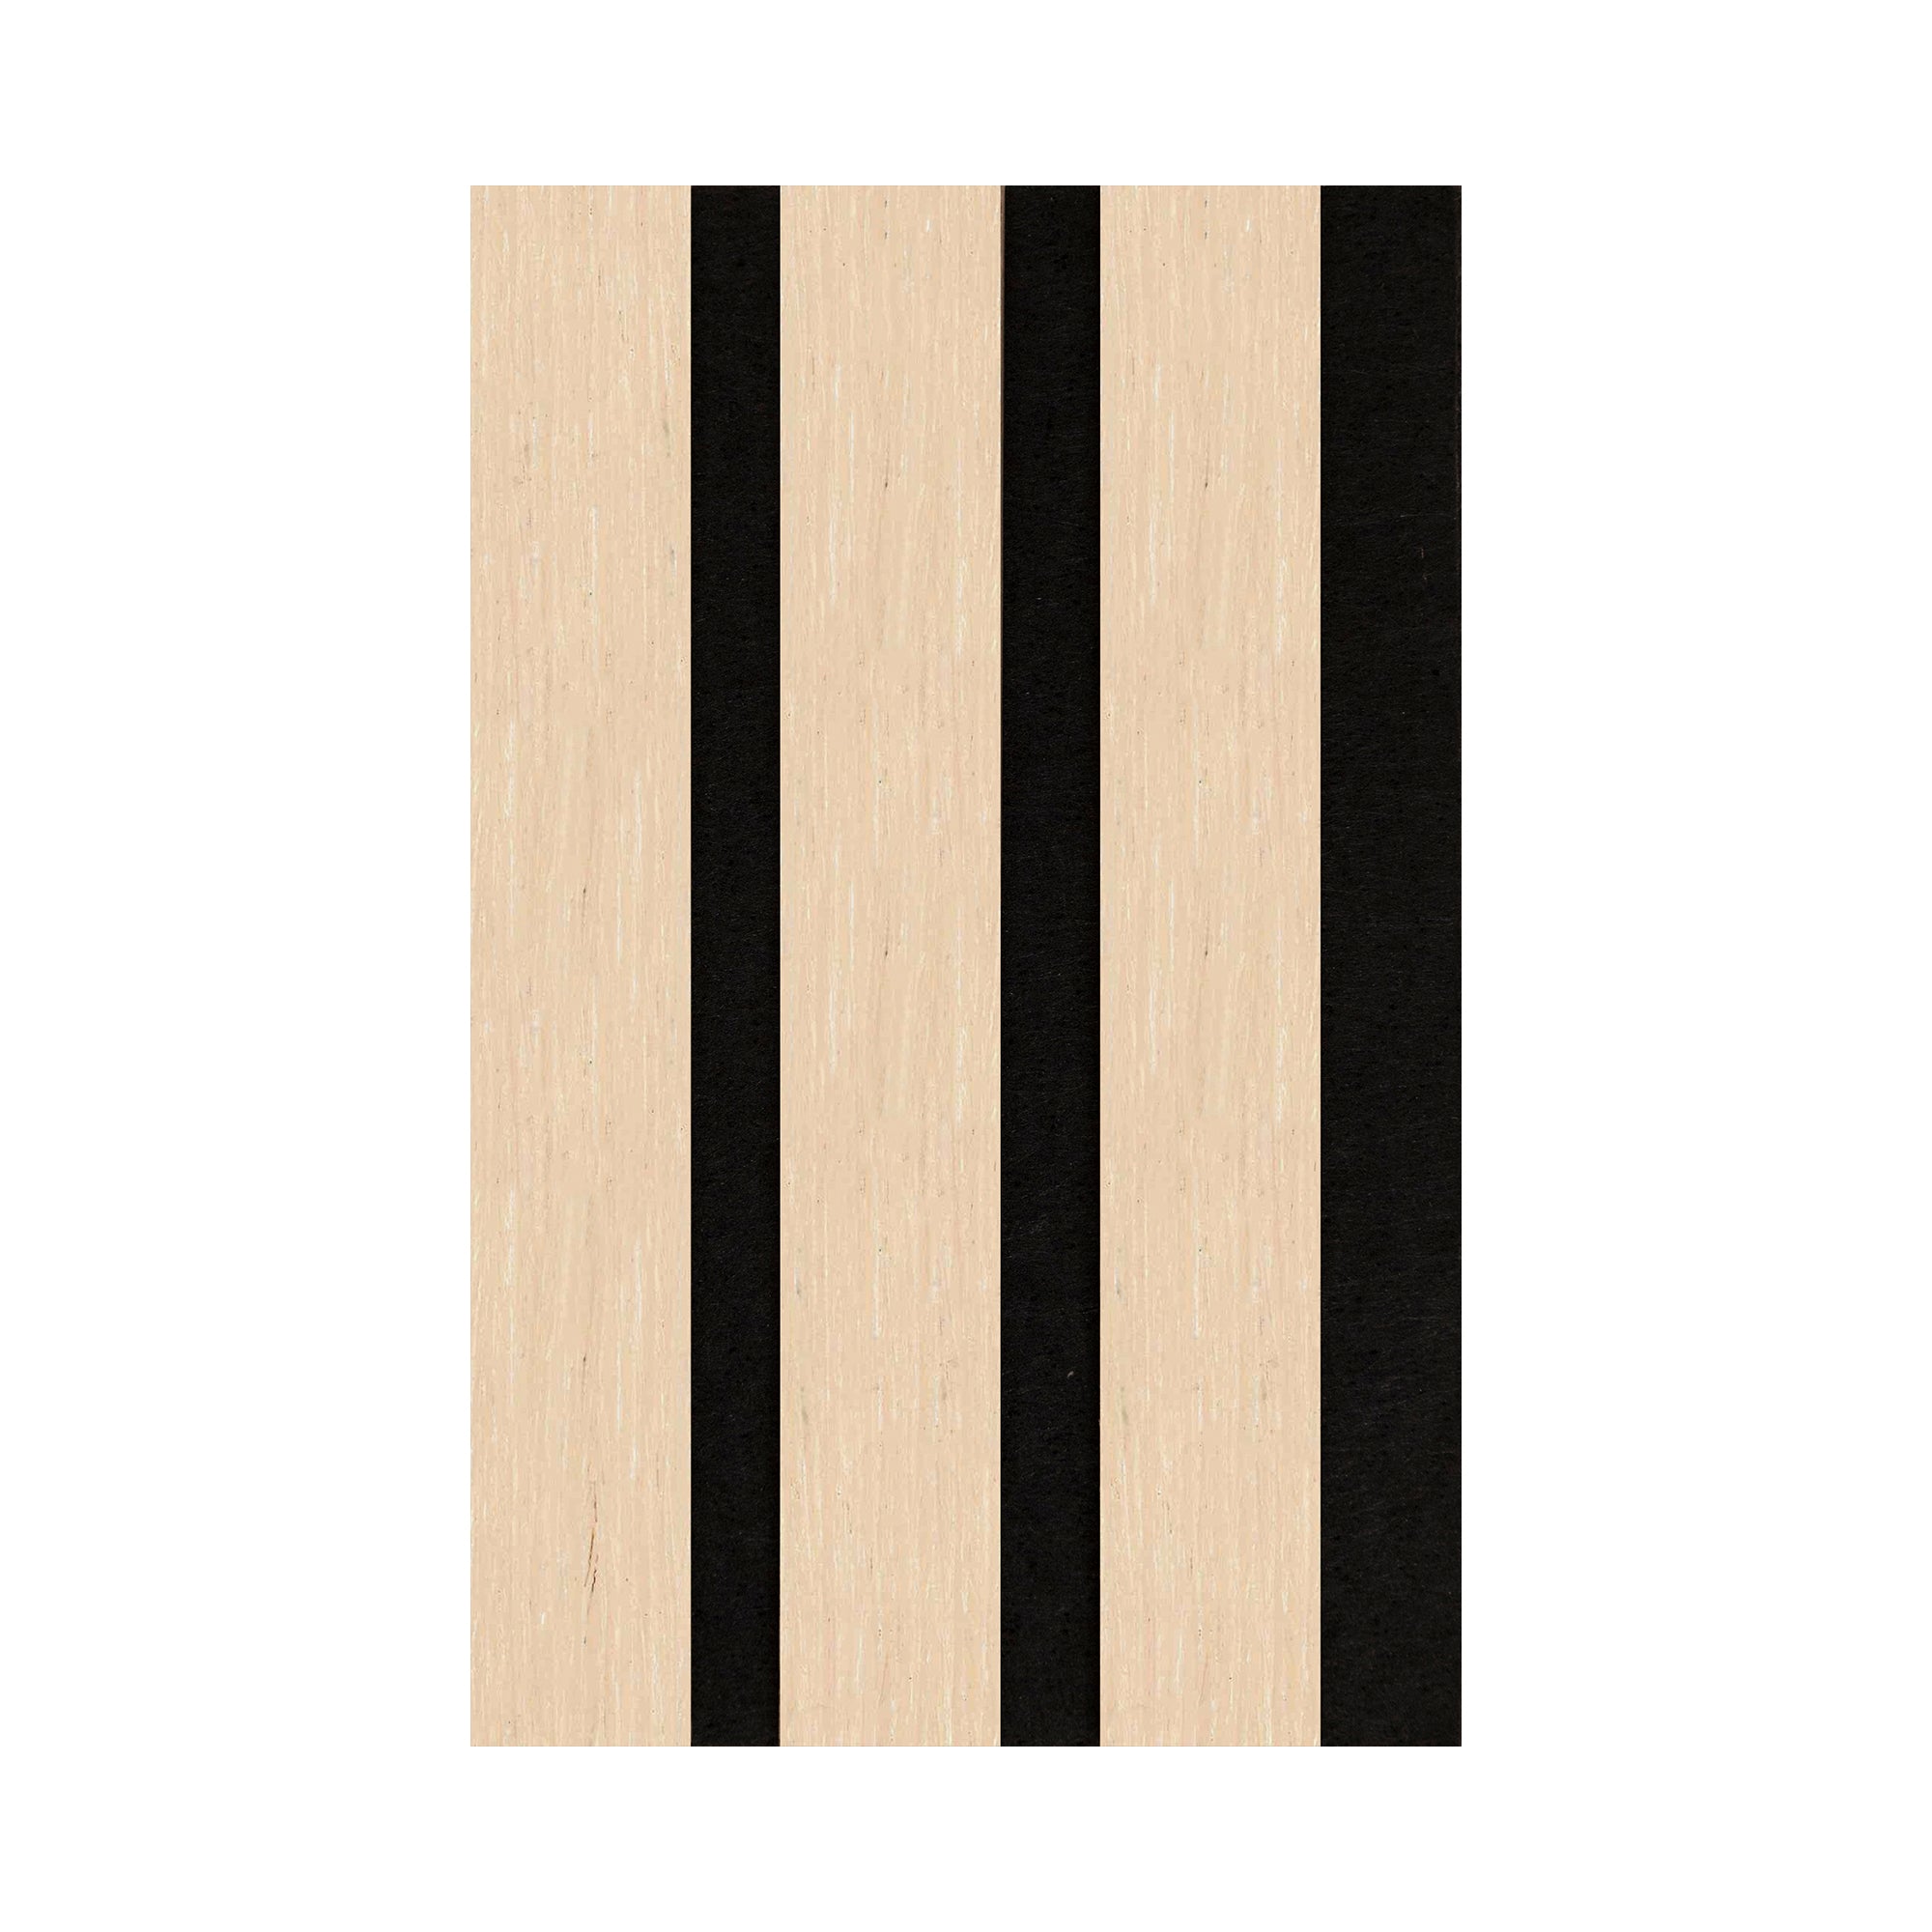 Sample Product 30x12.5x2.1 cm Golden Oak Acoustic Wood Wall Panels